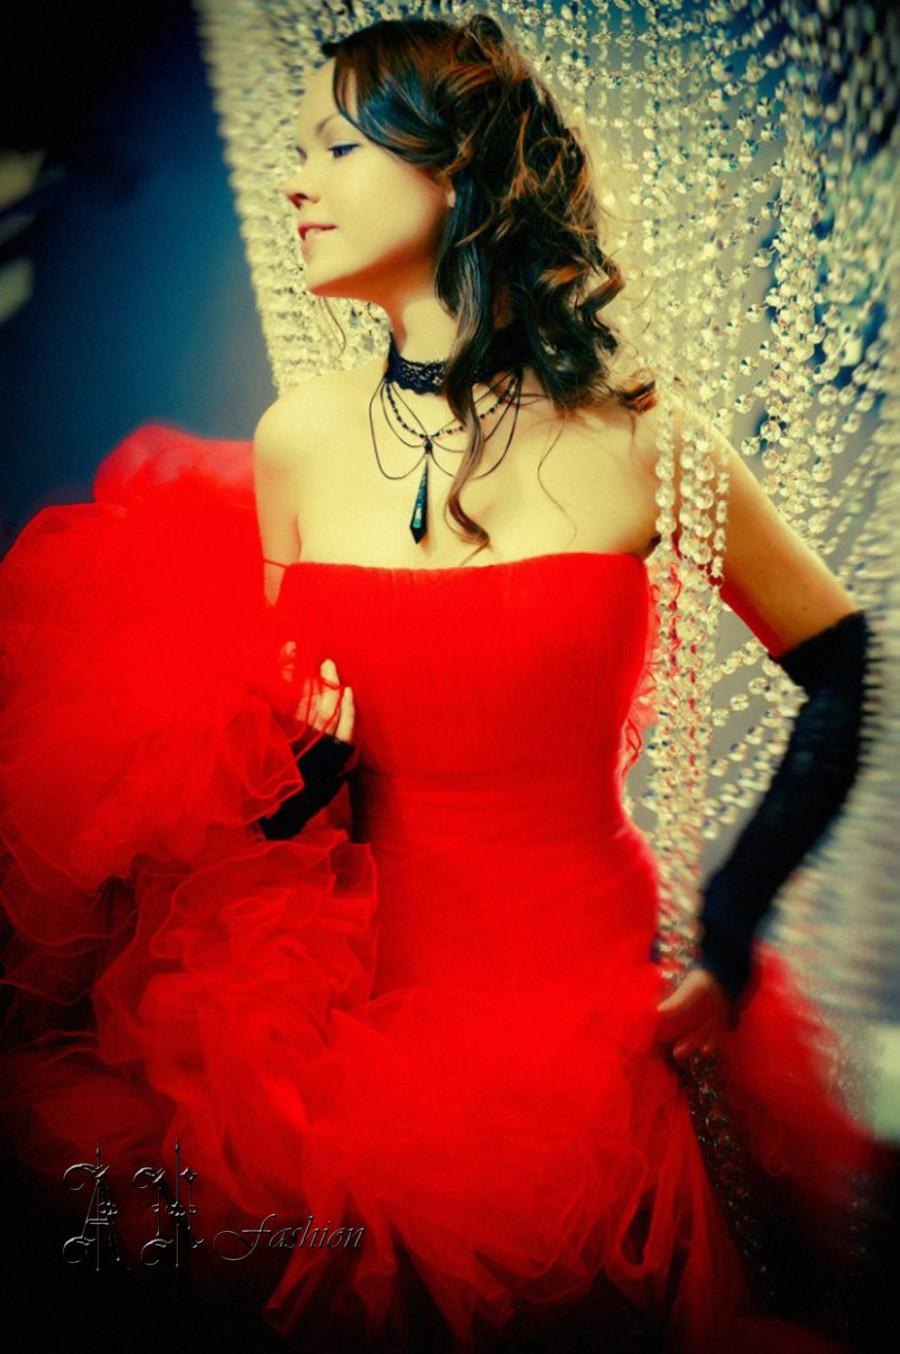 Wedding - Ball Gown Red Wedding Dress. Fluffy Wedding Dress. Red Wedding Dress.Princess Wedding Dress. Prom Dress. Formal Dress. Tightening corset.